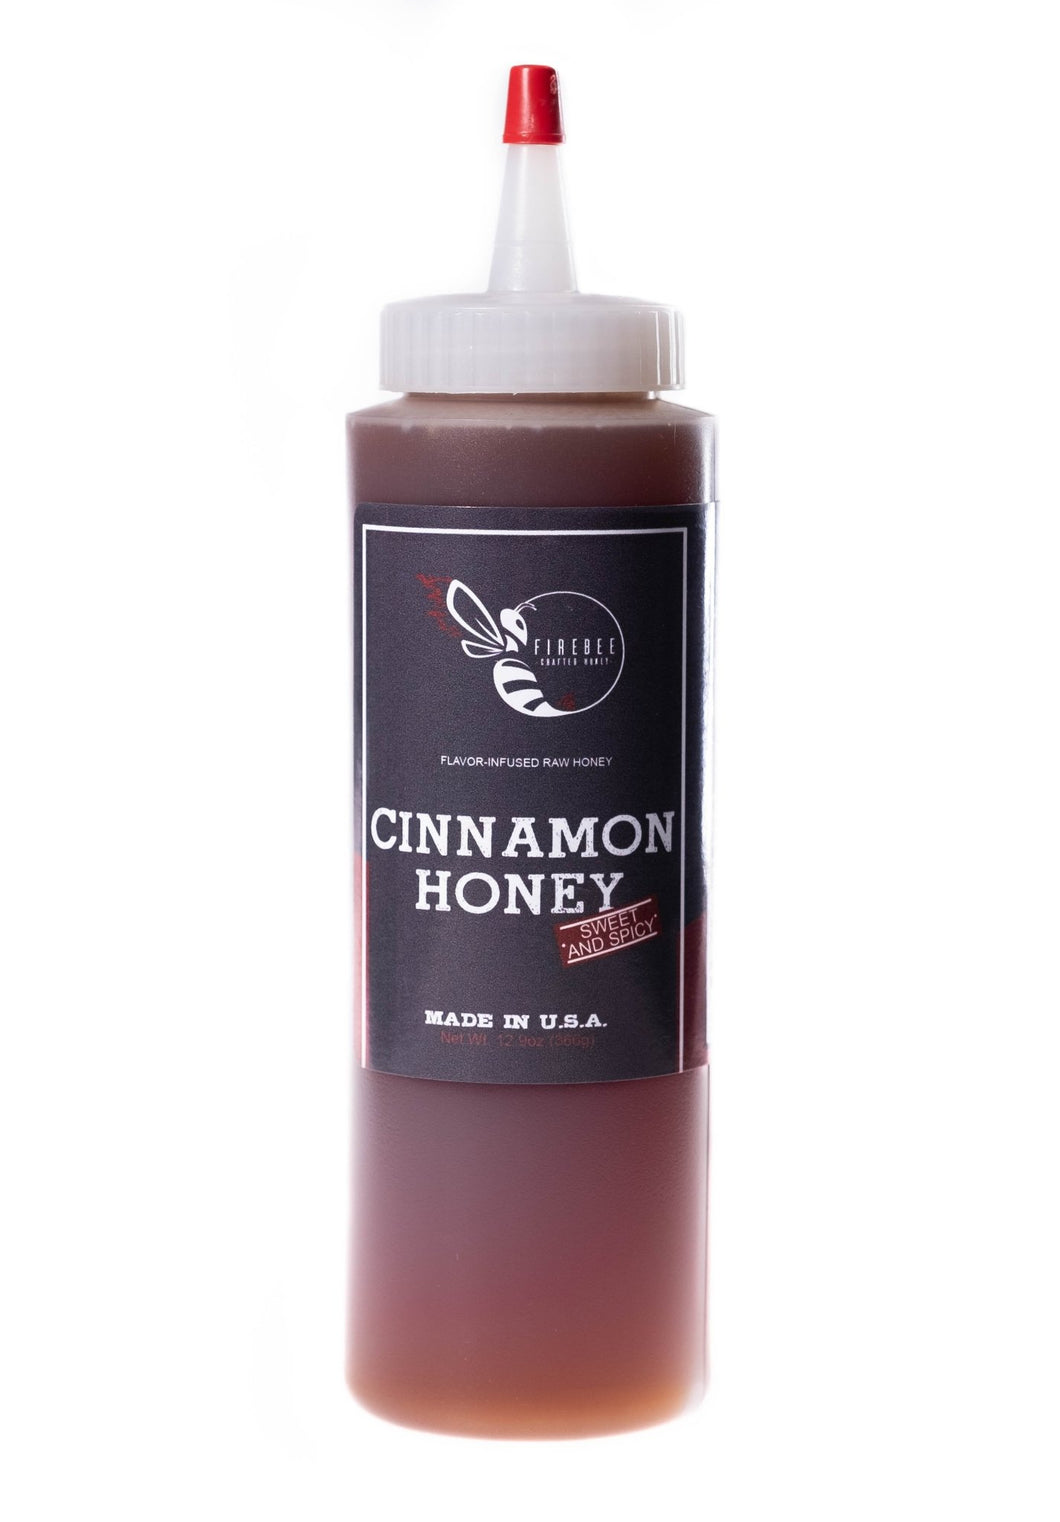 Firebee Cinnamon Honey - Firebee Honey